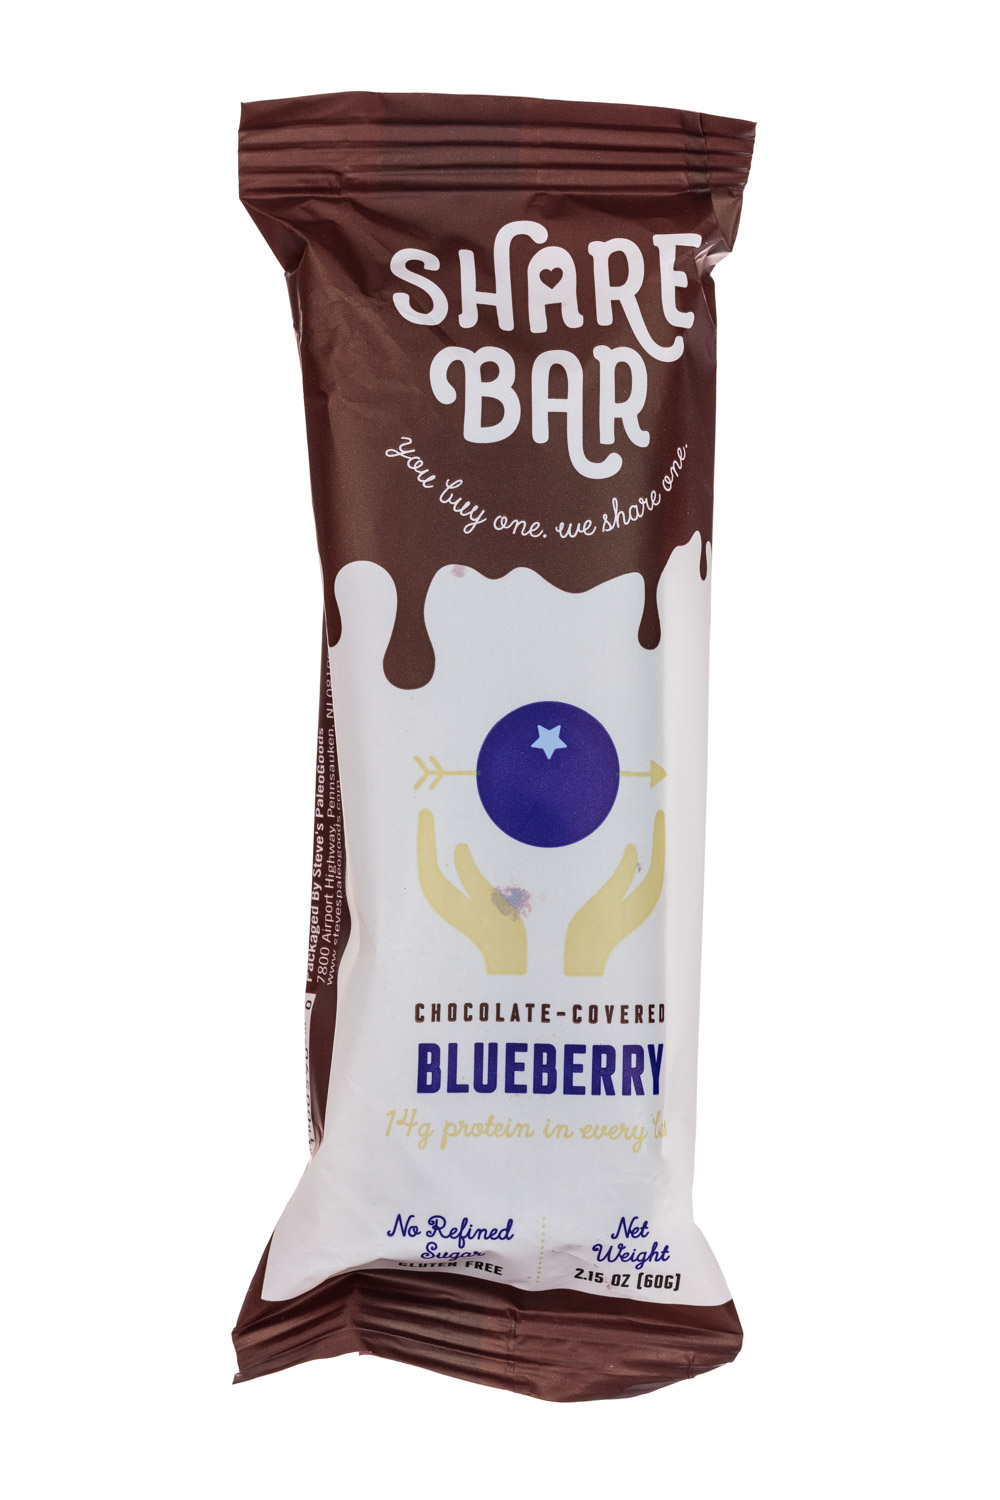 Blueberry Chocolate Share Bar